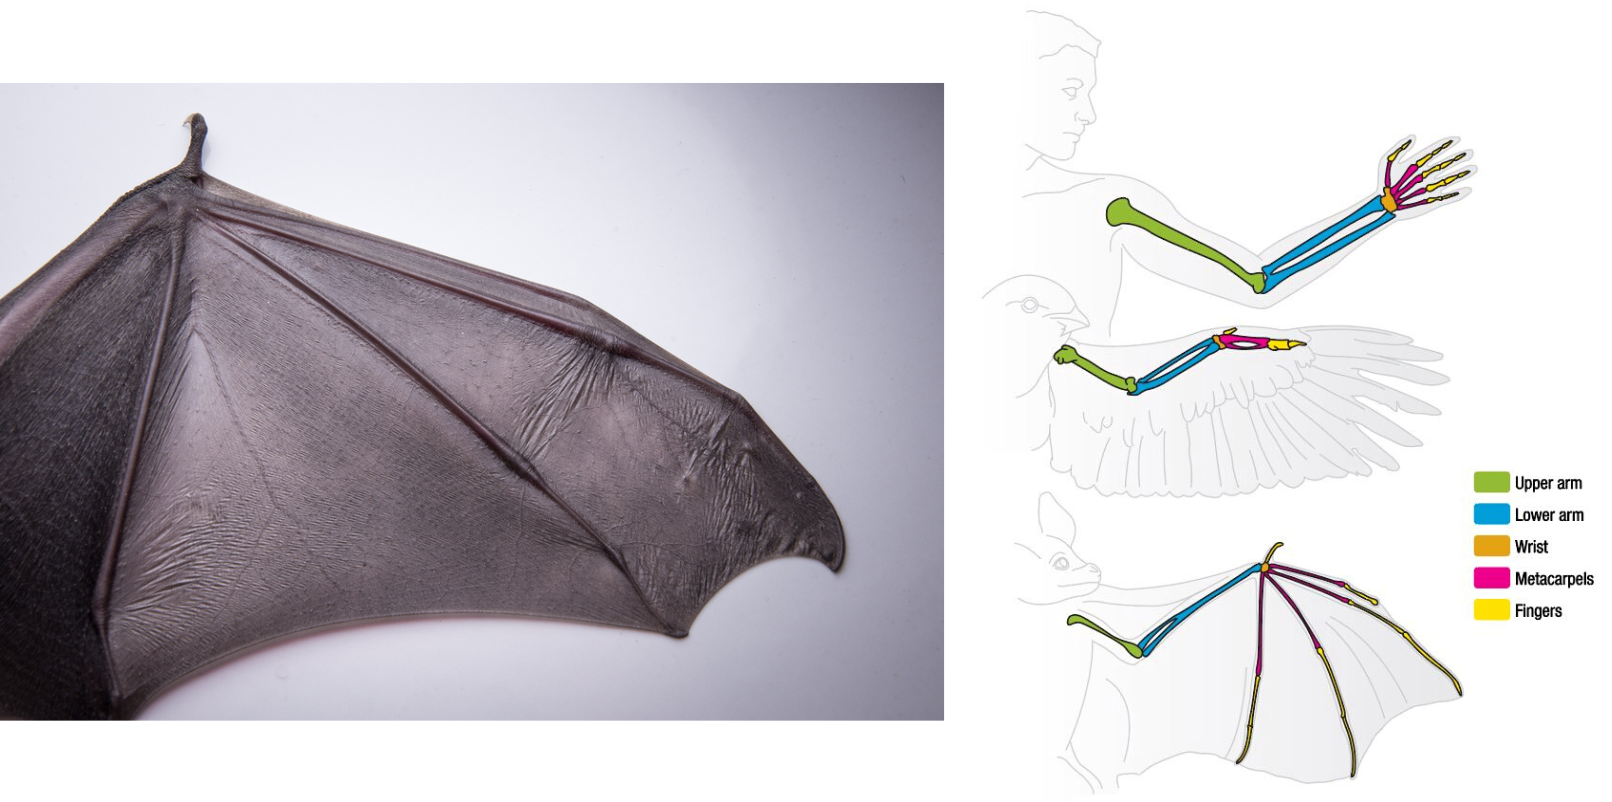 anatomy of a bat wing